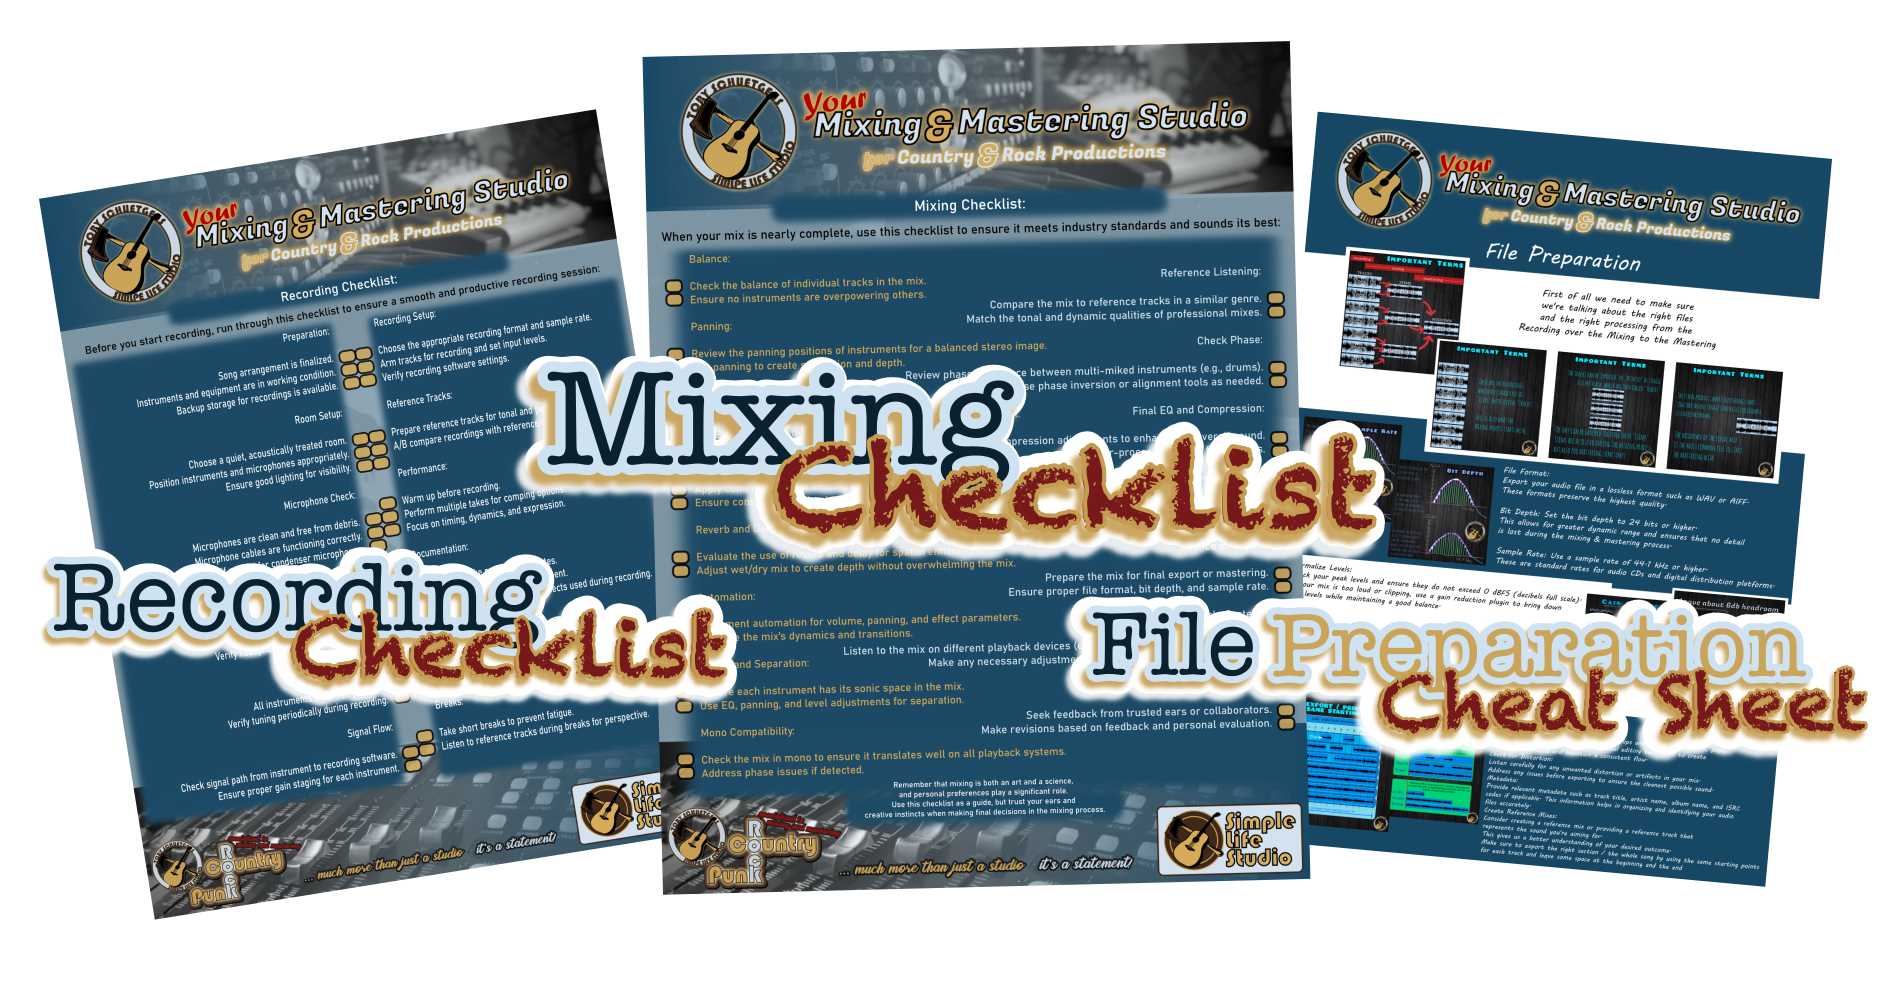 Mixing Checklist